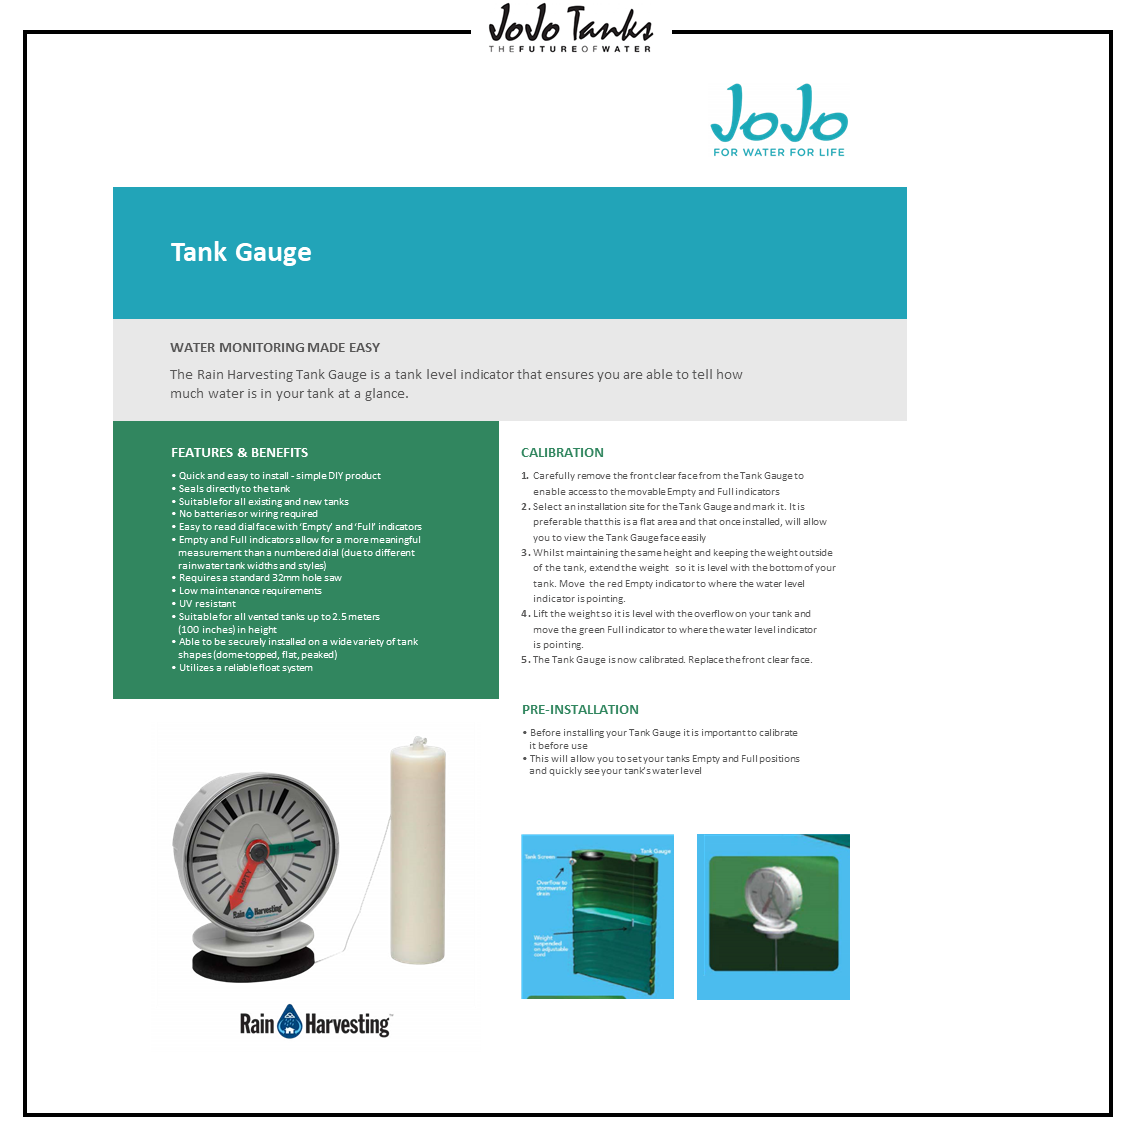 JOJO - Leaflet-Tank-Gauge Catalogue